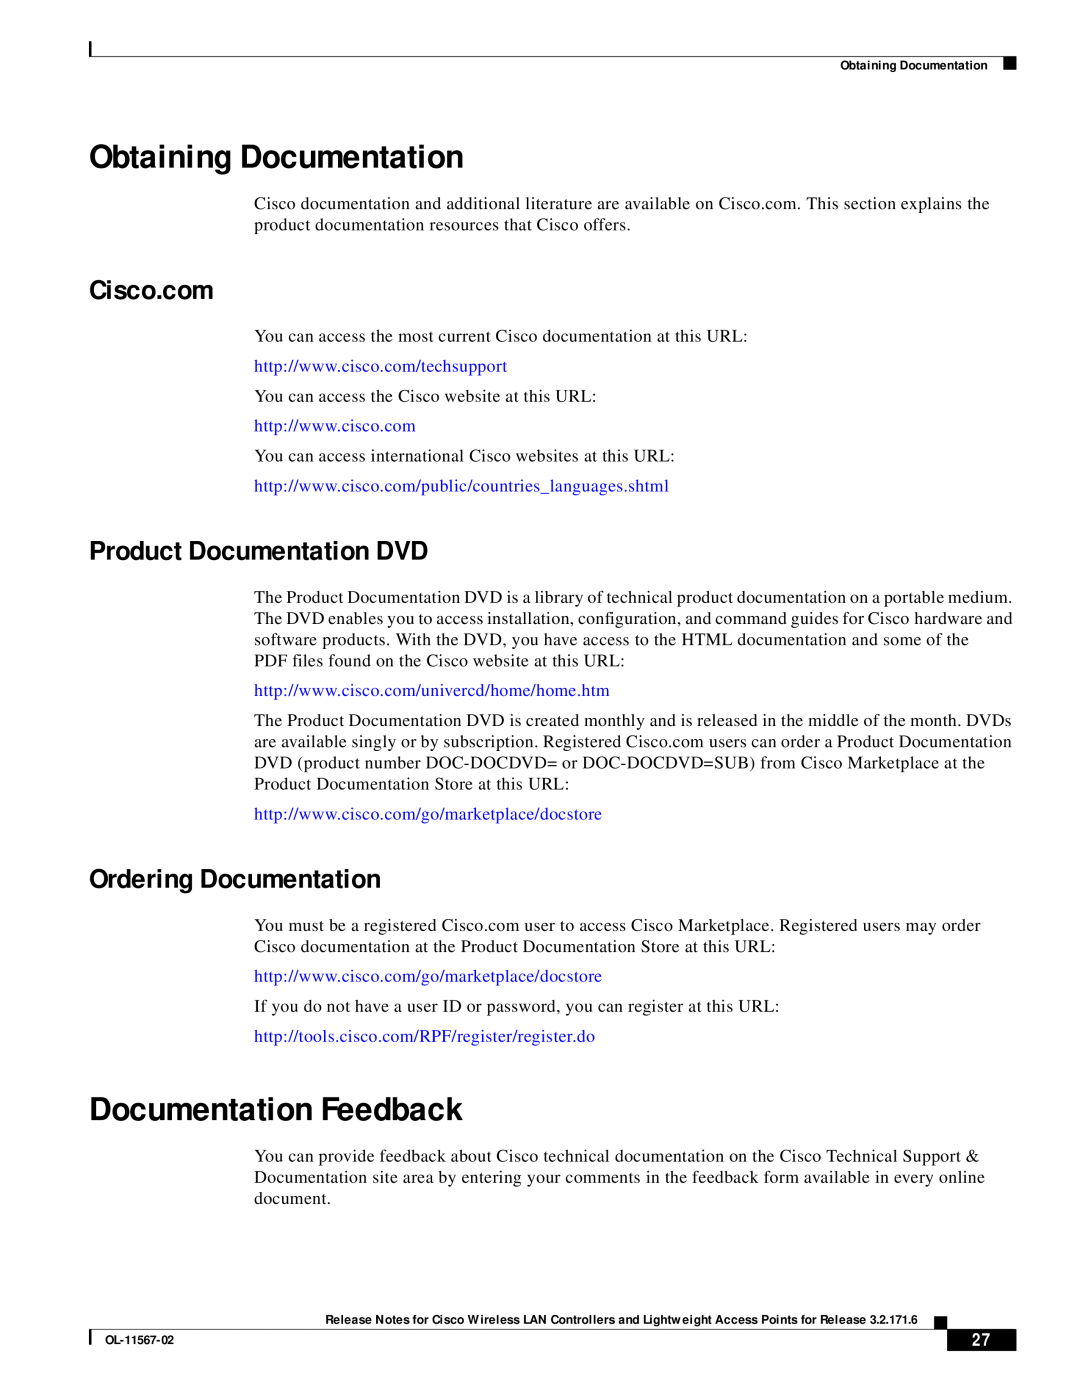 Cisco Systems OL-11567-02 manual Obtaining Documentation, Documentation Feedback, Cisco.com, Product Documentation DVD 